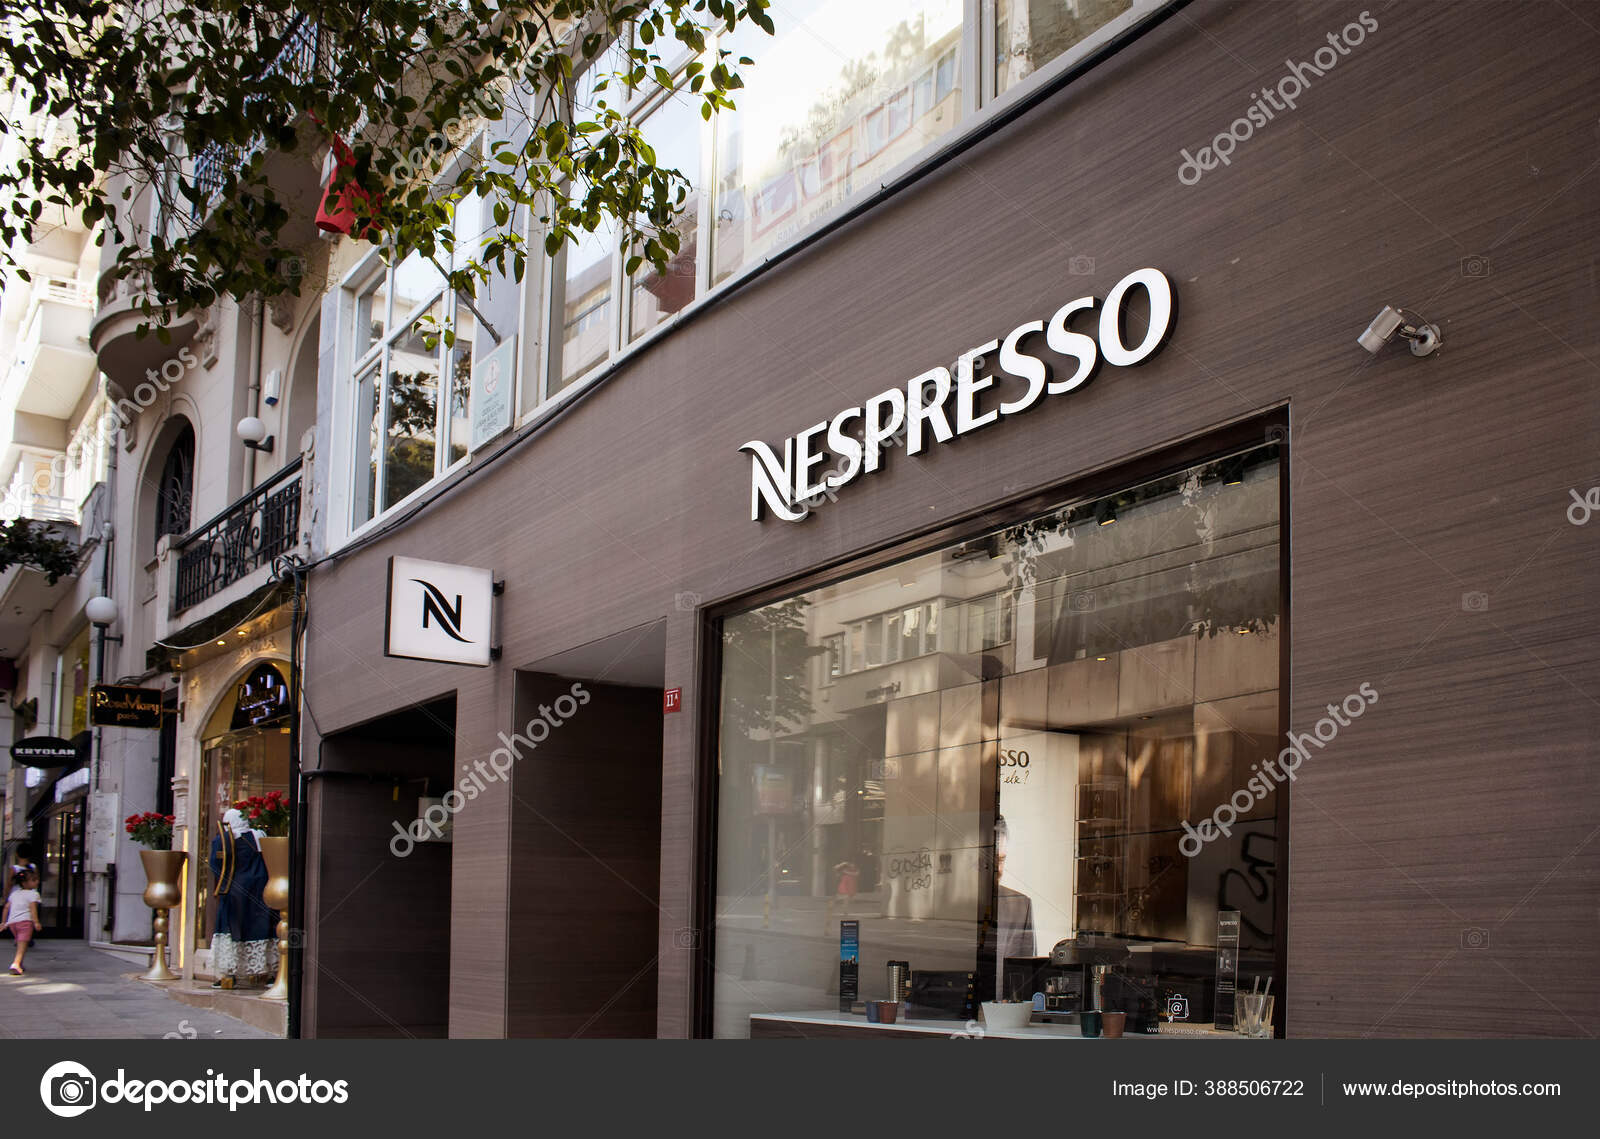 Nespresso shop Stock Photos, Royalty Free Images | Depositphotos